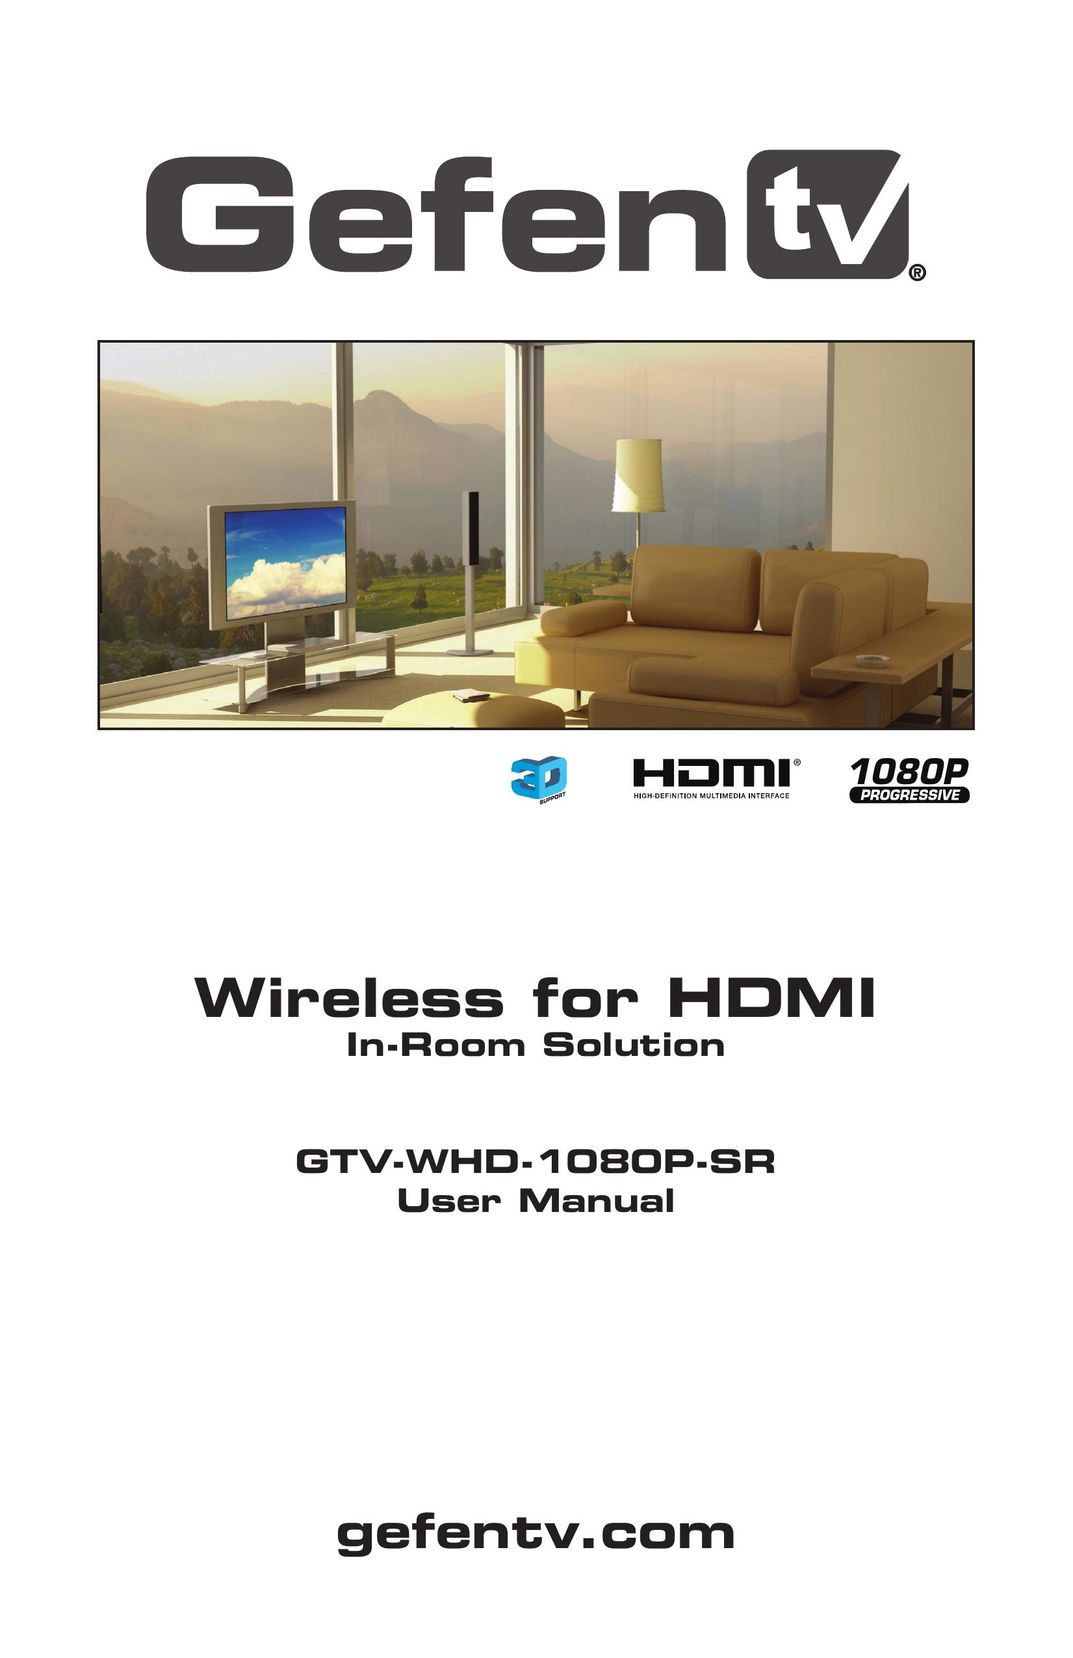 Gefen GTV-WHD-1080P-SR TV Receiver User Manual